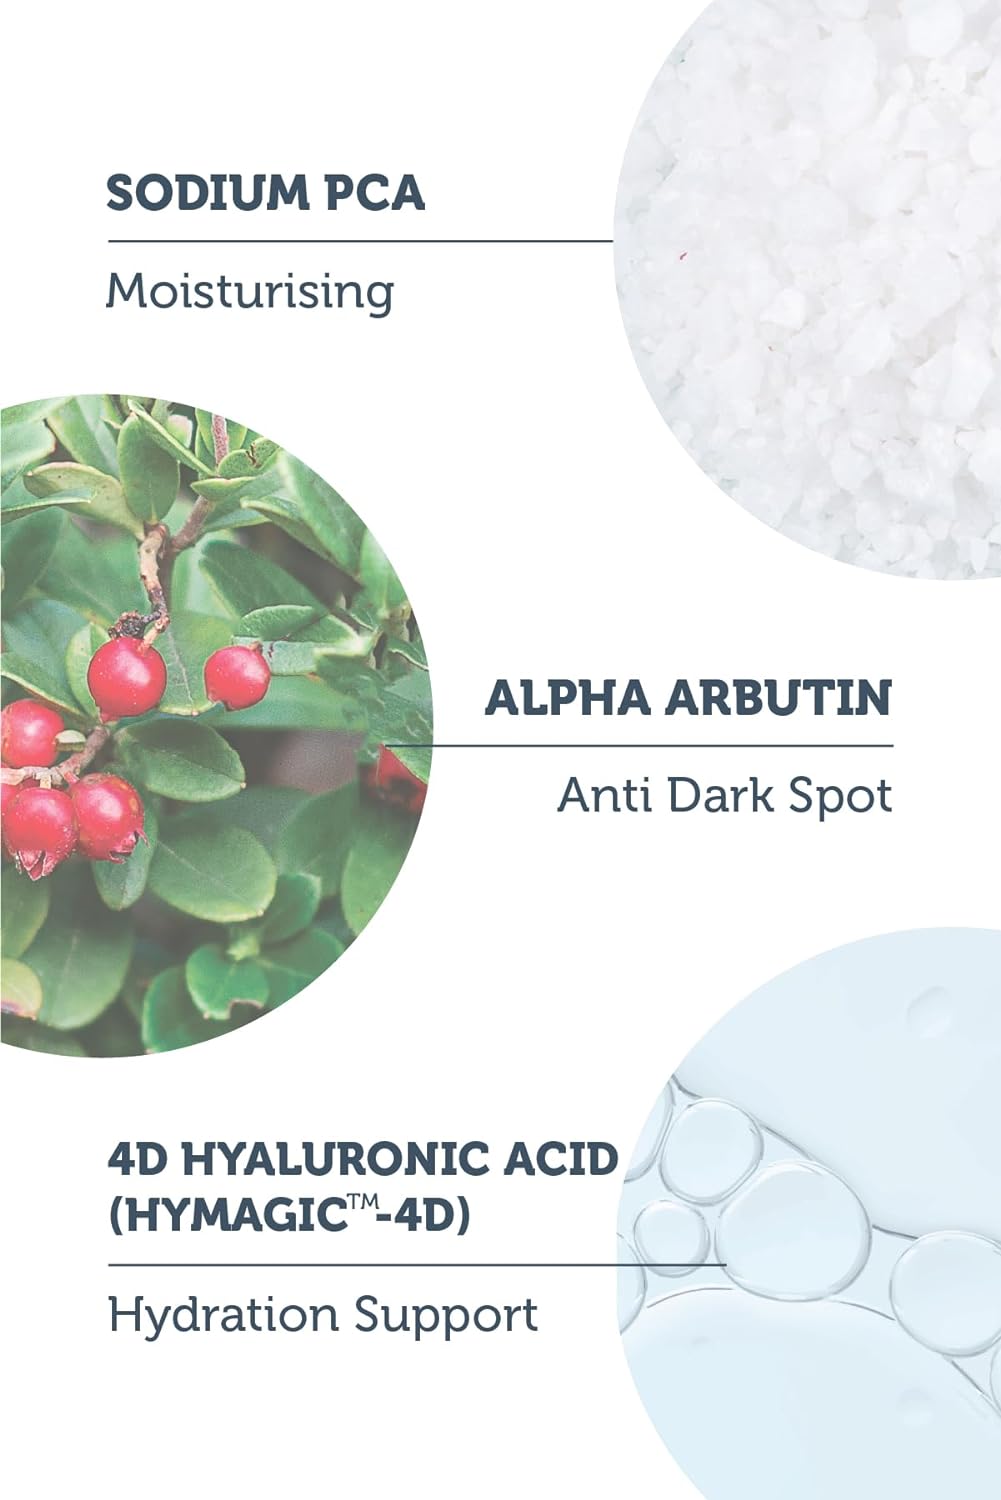 The Purest Solutions Brightening Serum (Arbutin 2% + Hyaluronic Acid) - Eliminate Skin Tone Inequalities  Support Vibrant Bright Skin - Vegan | Cruelty Free | Eco Friendly (30 ml)